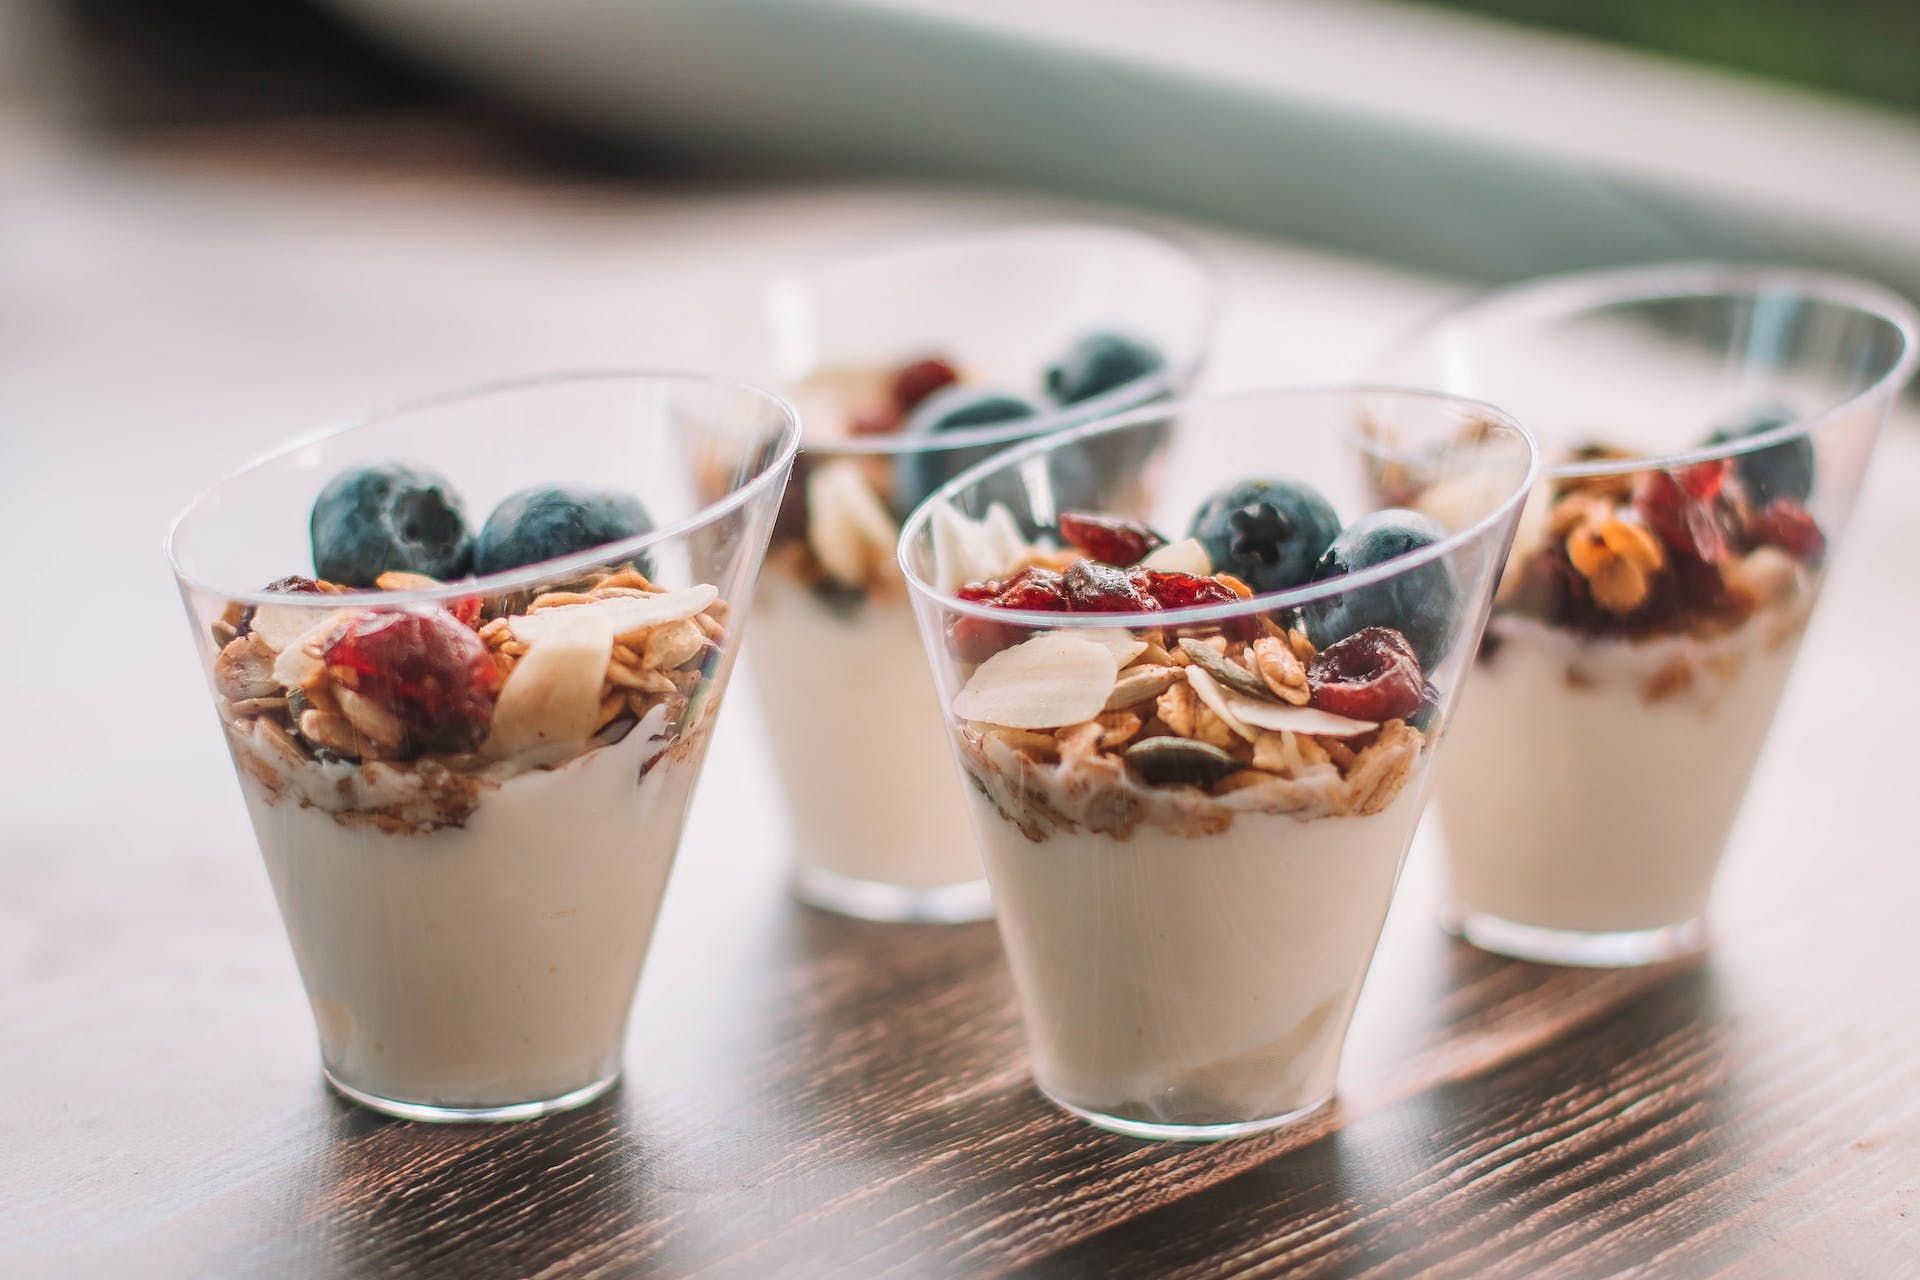 Flavored yogurts are less filling. (Image via Pexels/Valeria Boltneva)